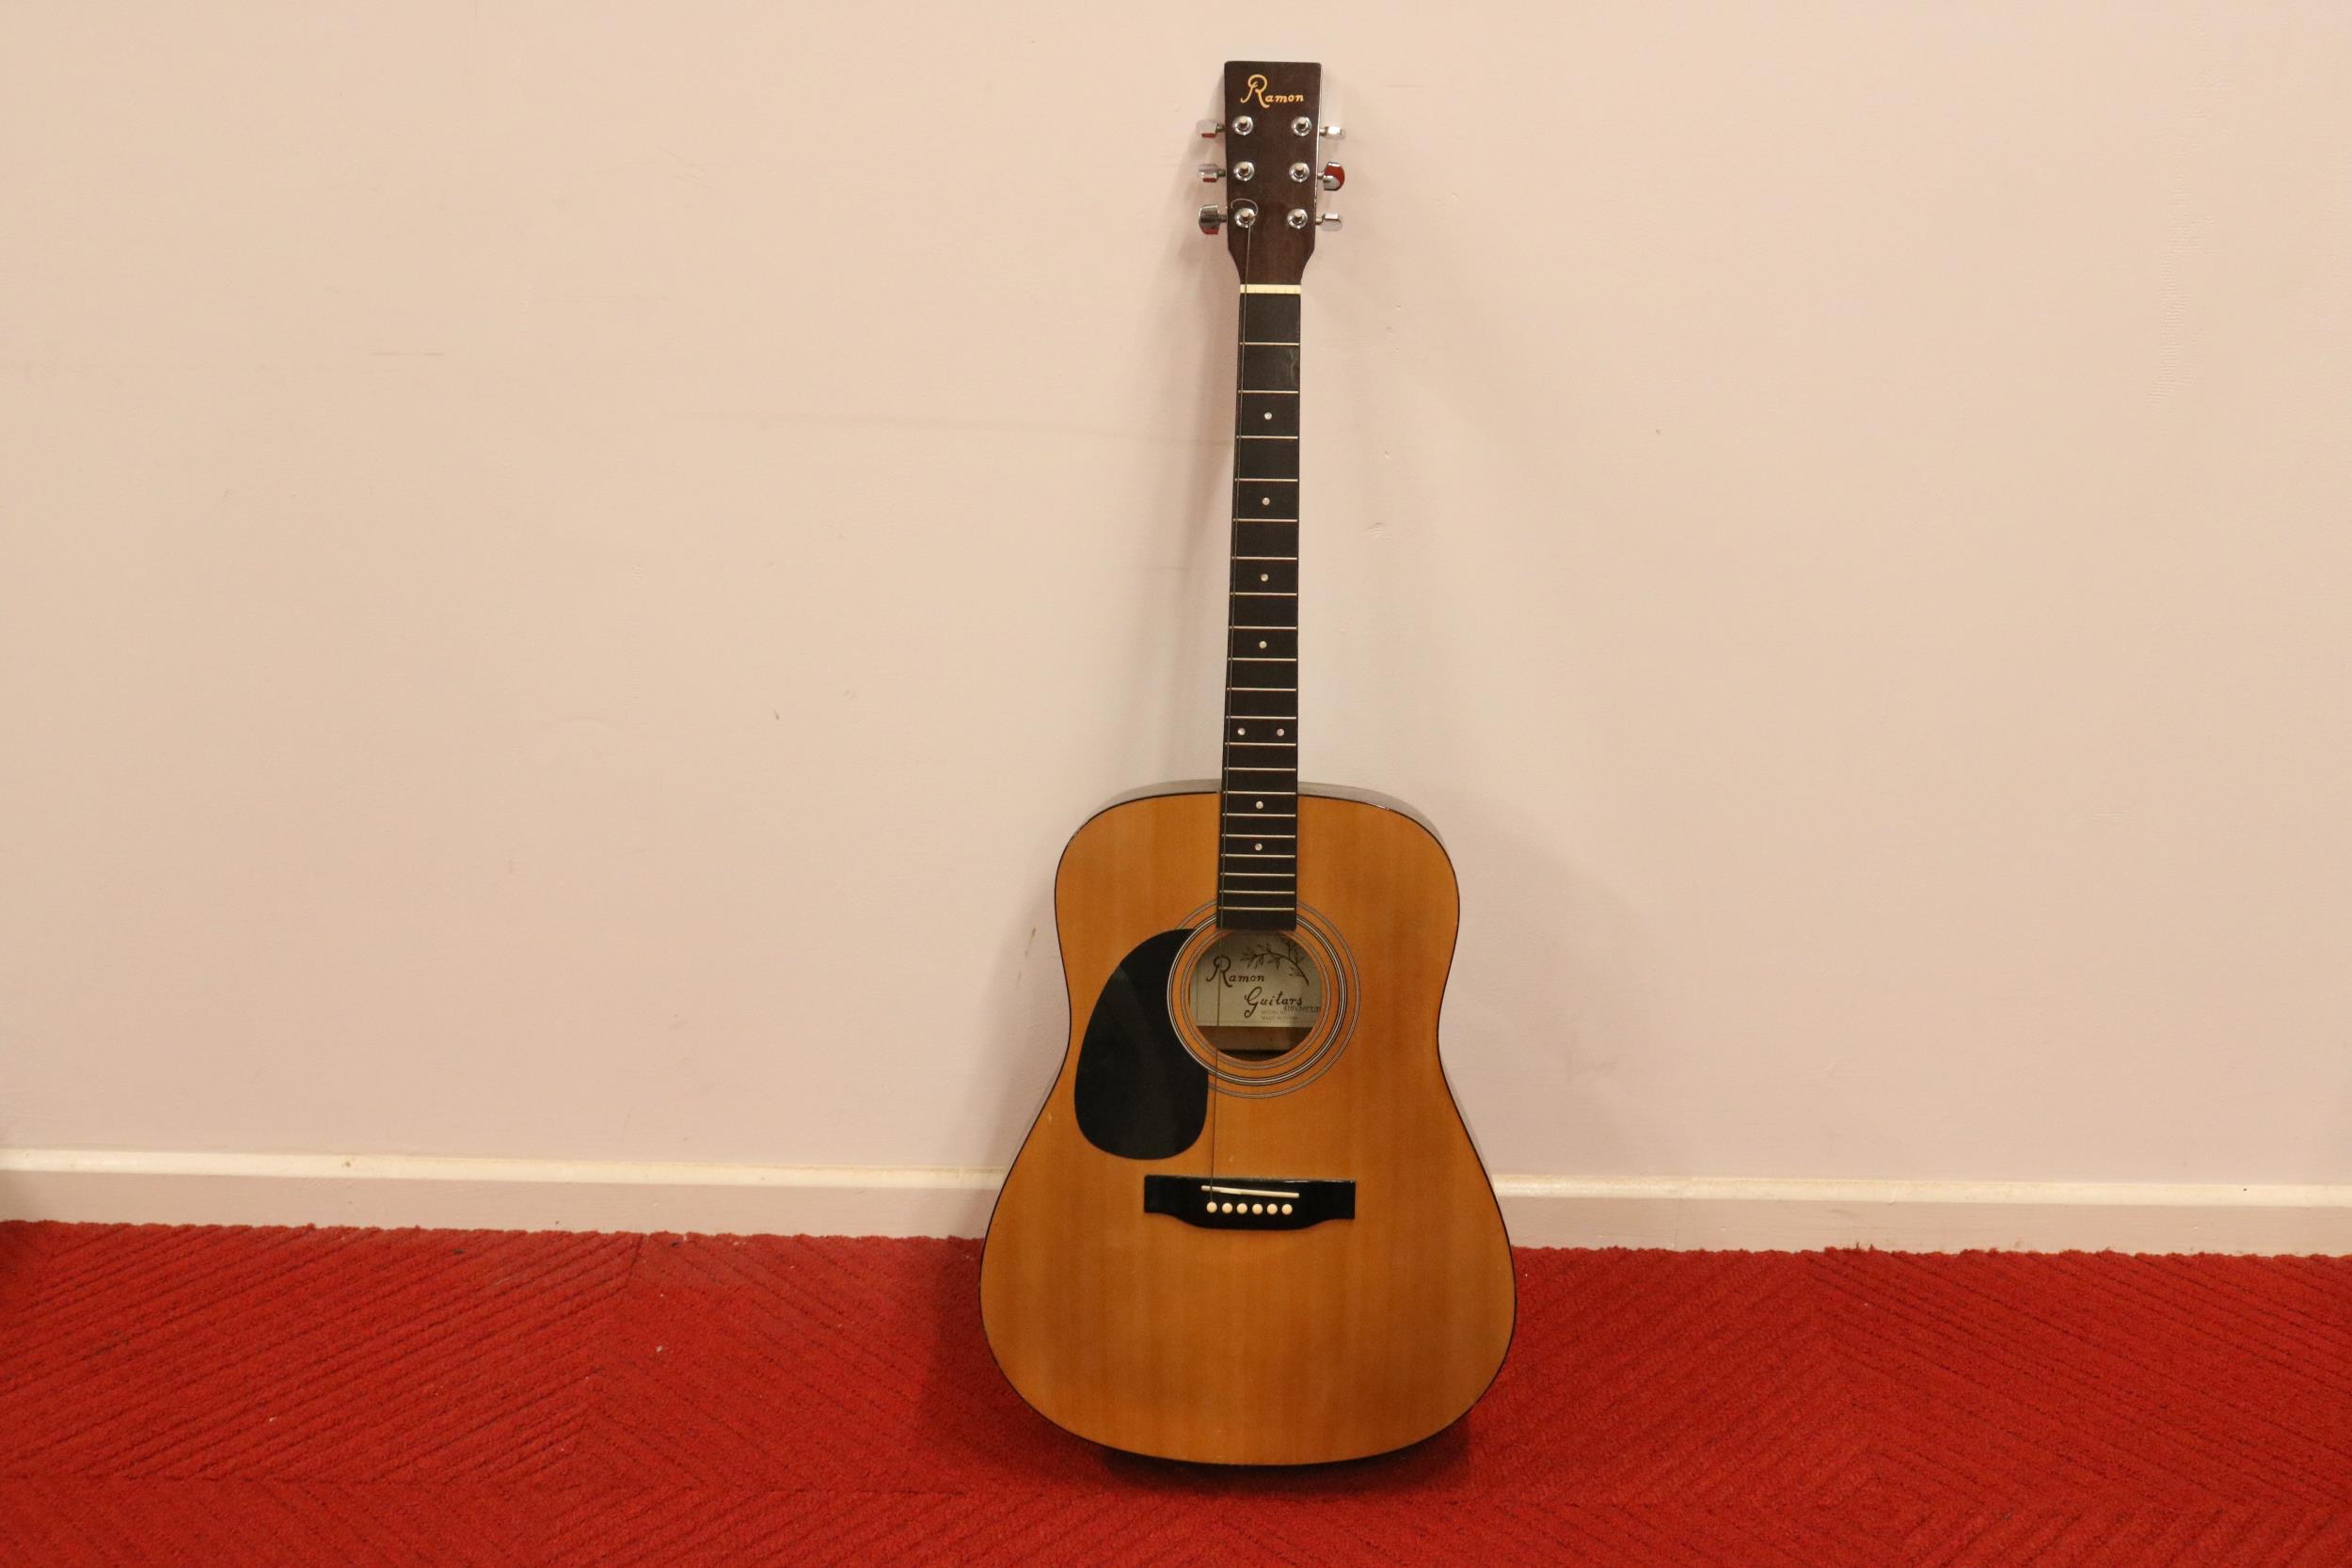 Ramon acoustic Guitar Model Number 4103